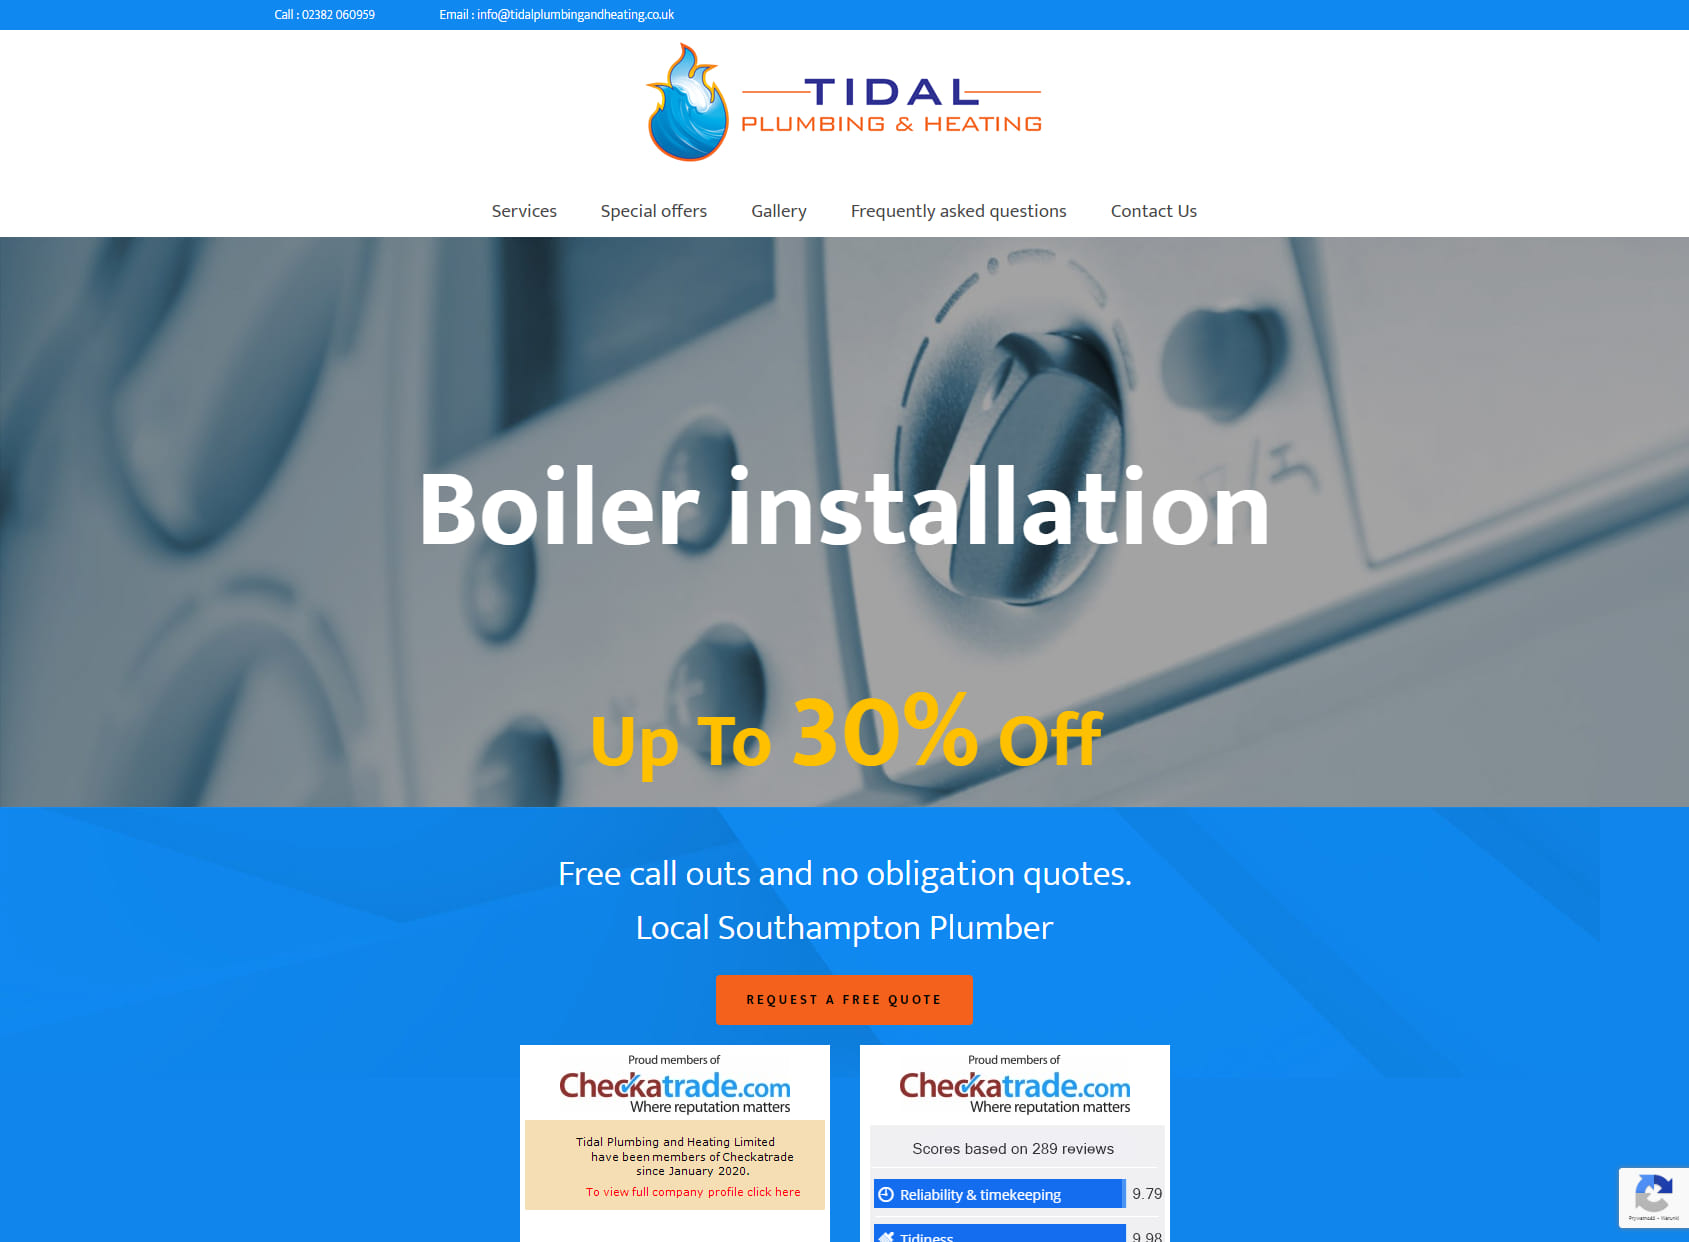 Tidal Plumbing and Heating Ltd